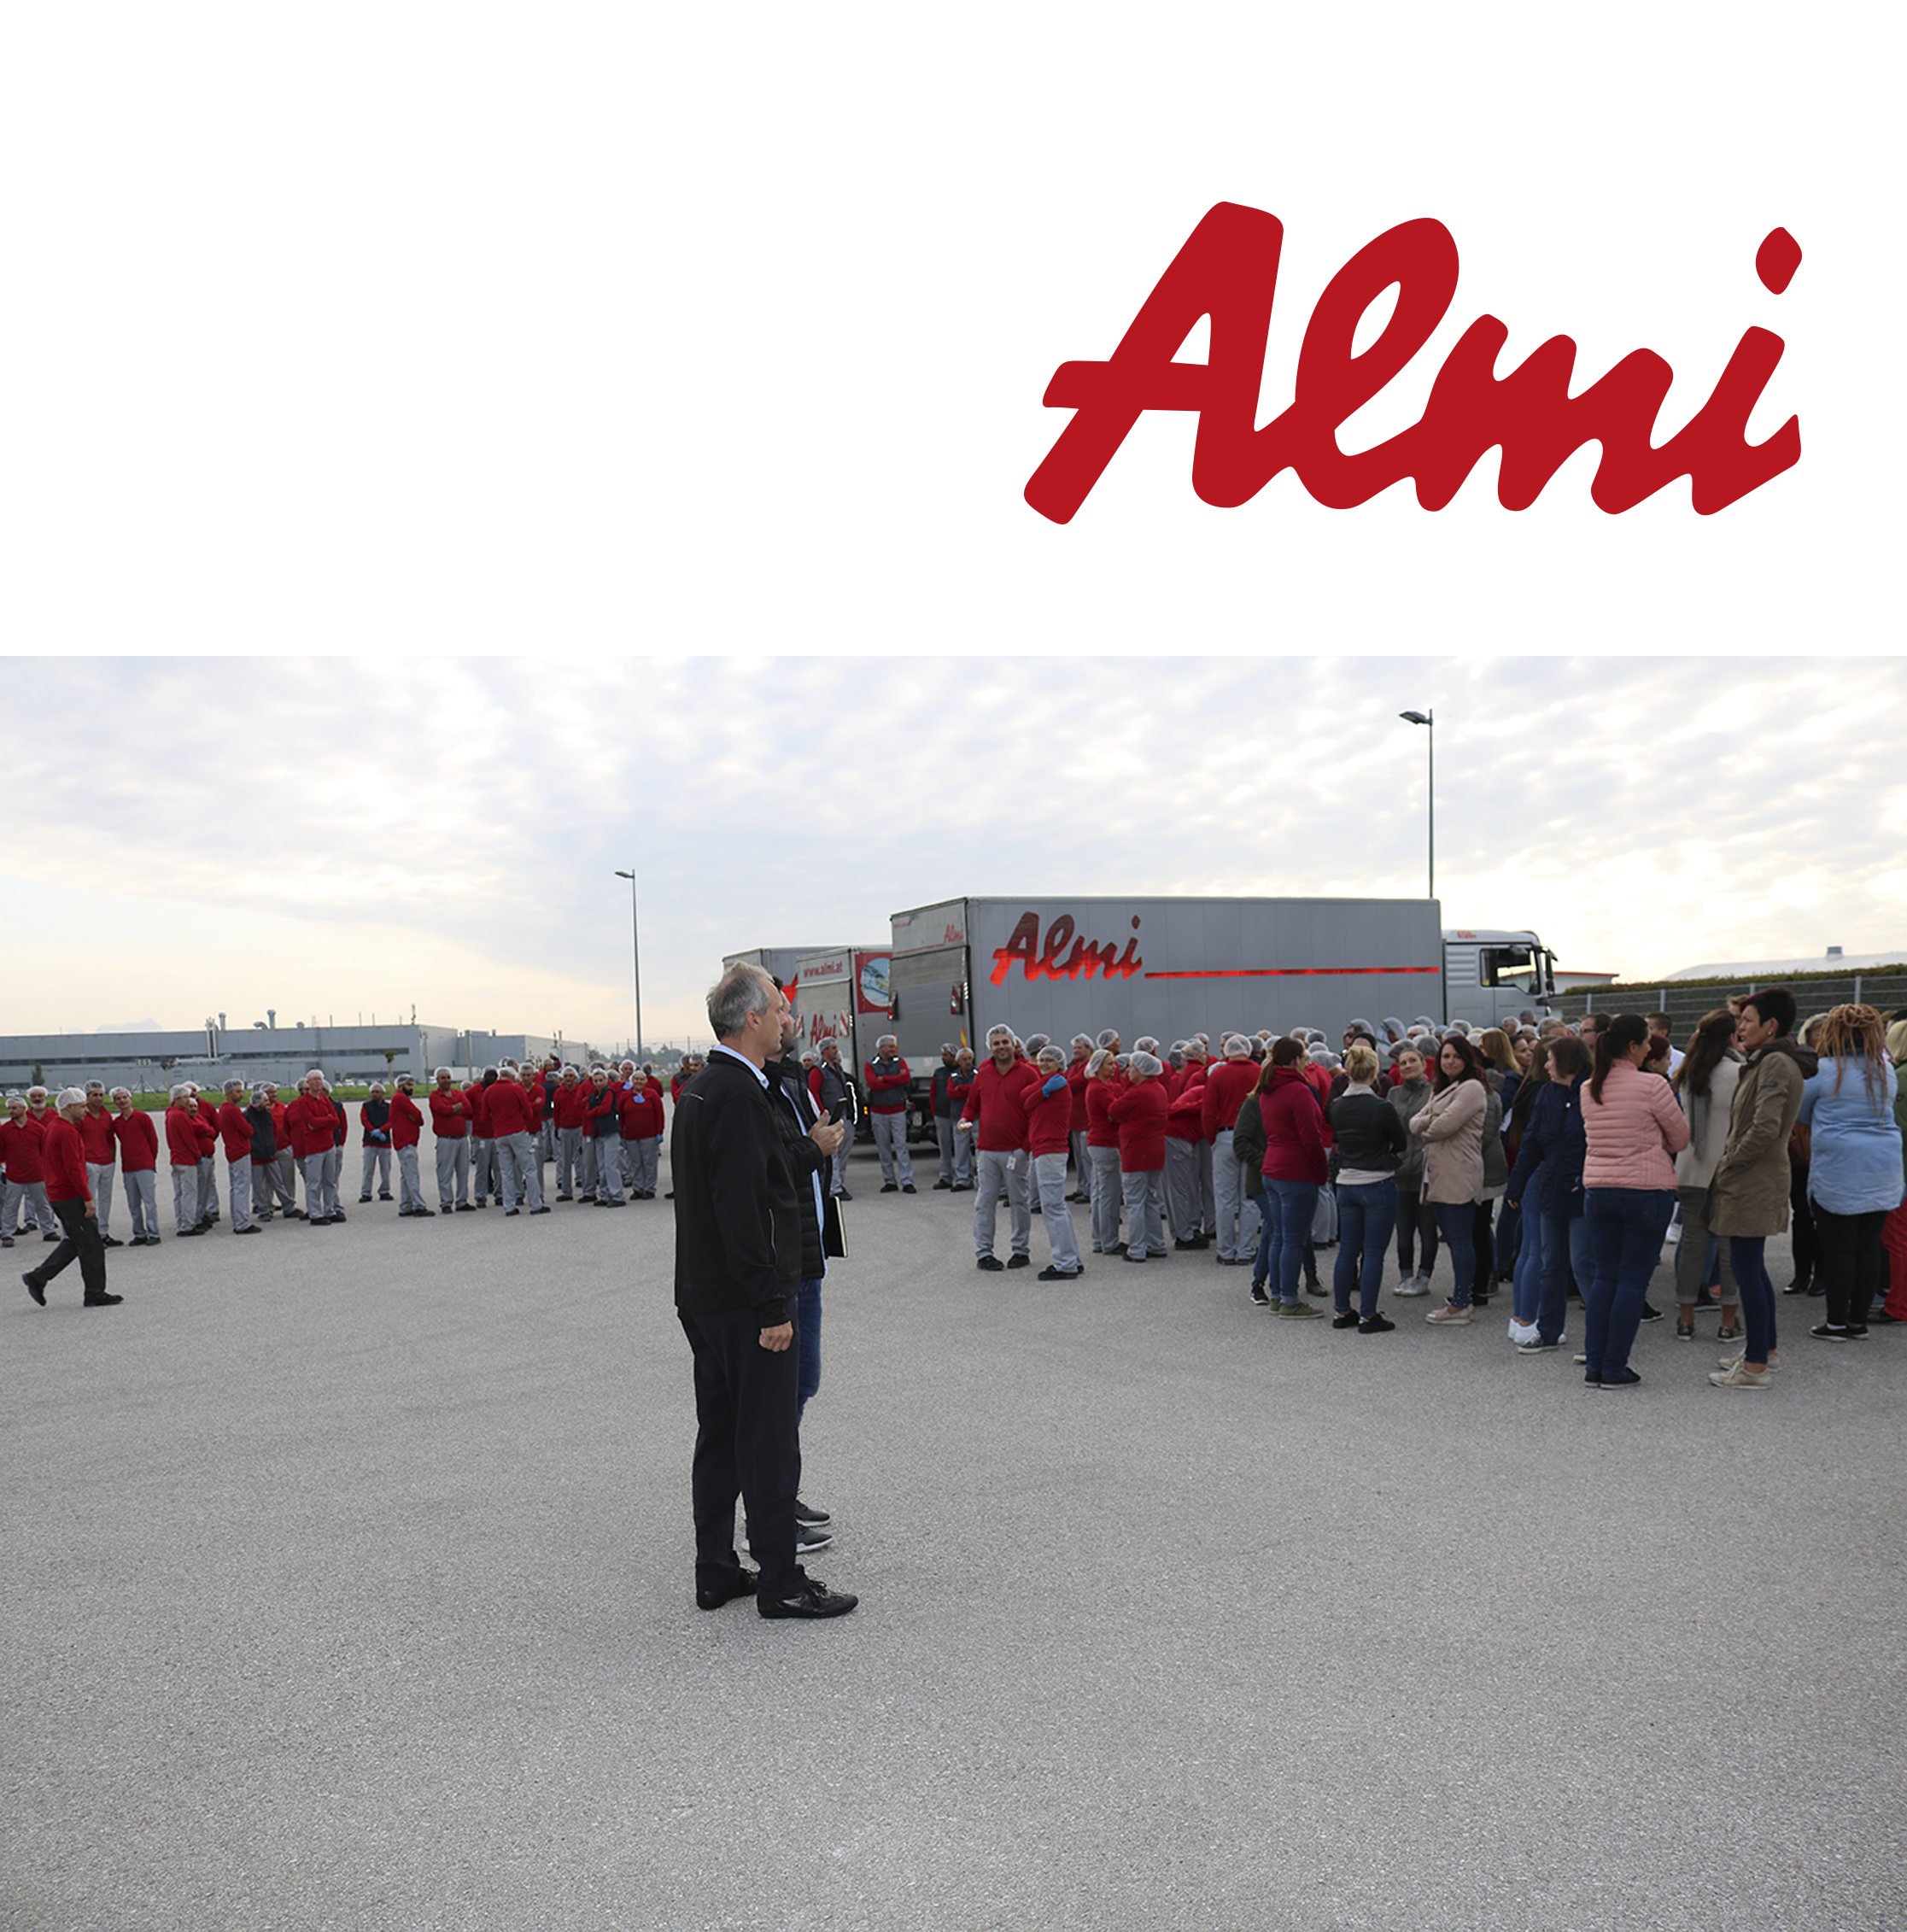 Almi - News - Title